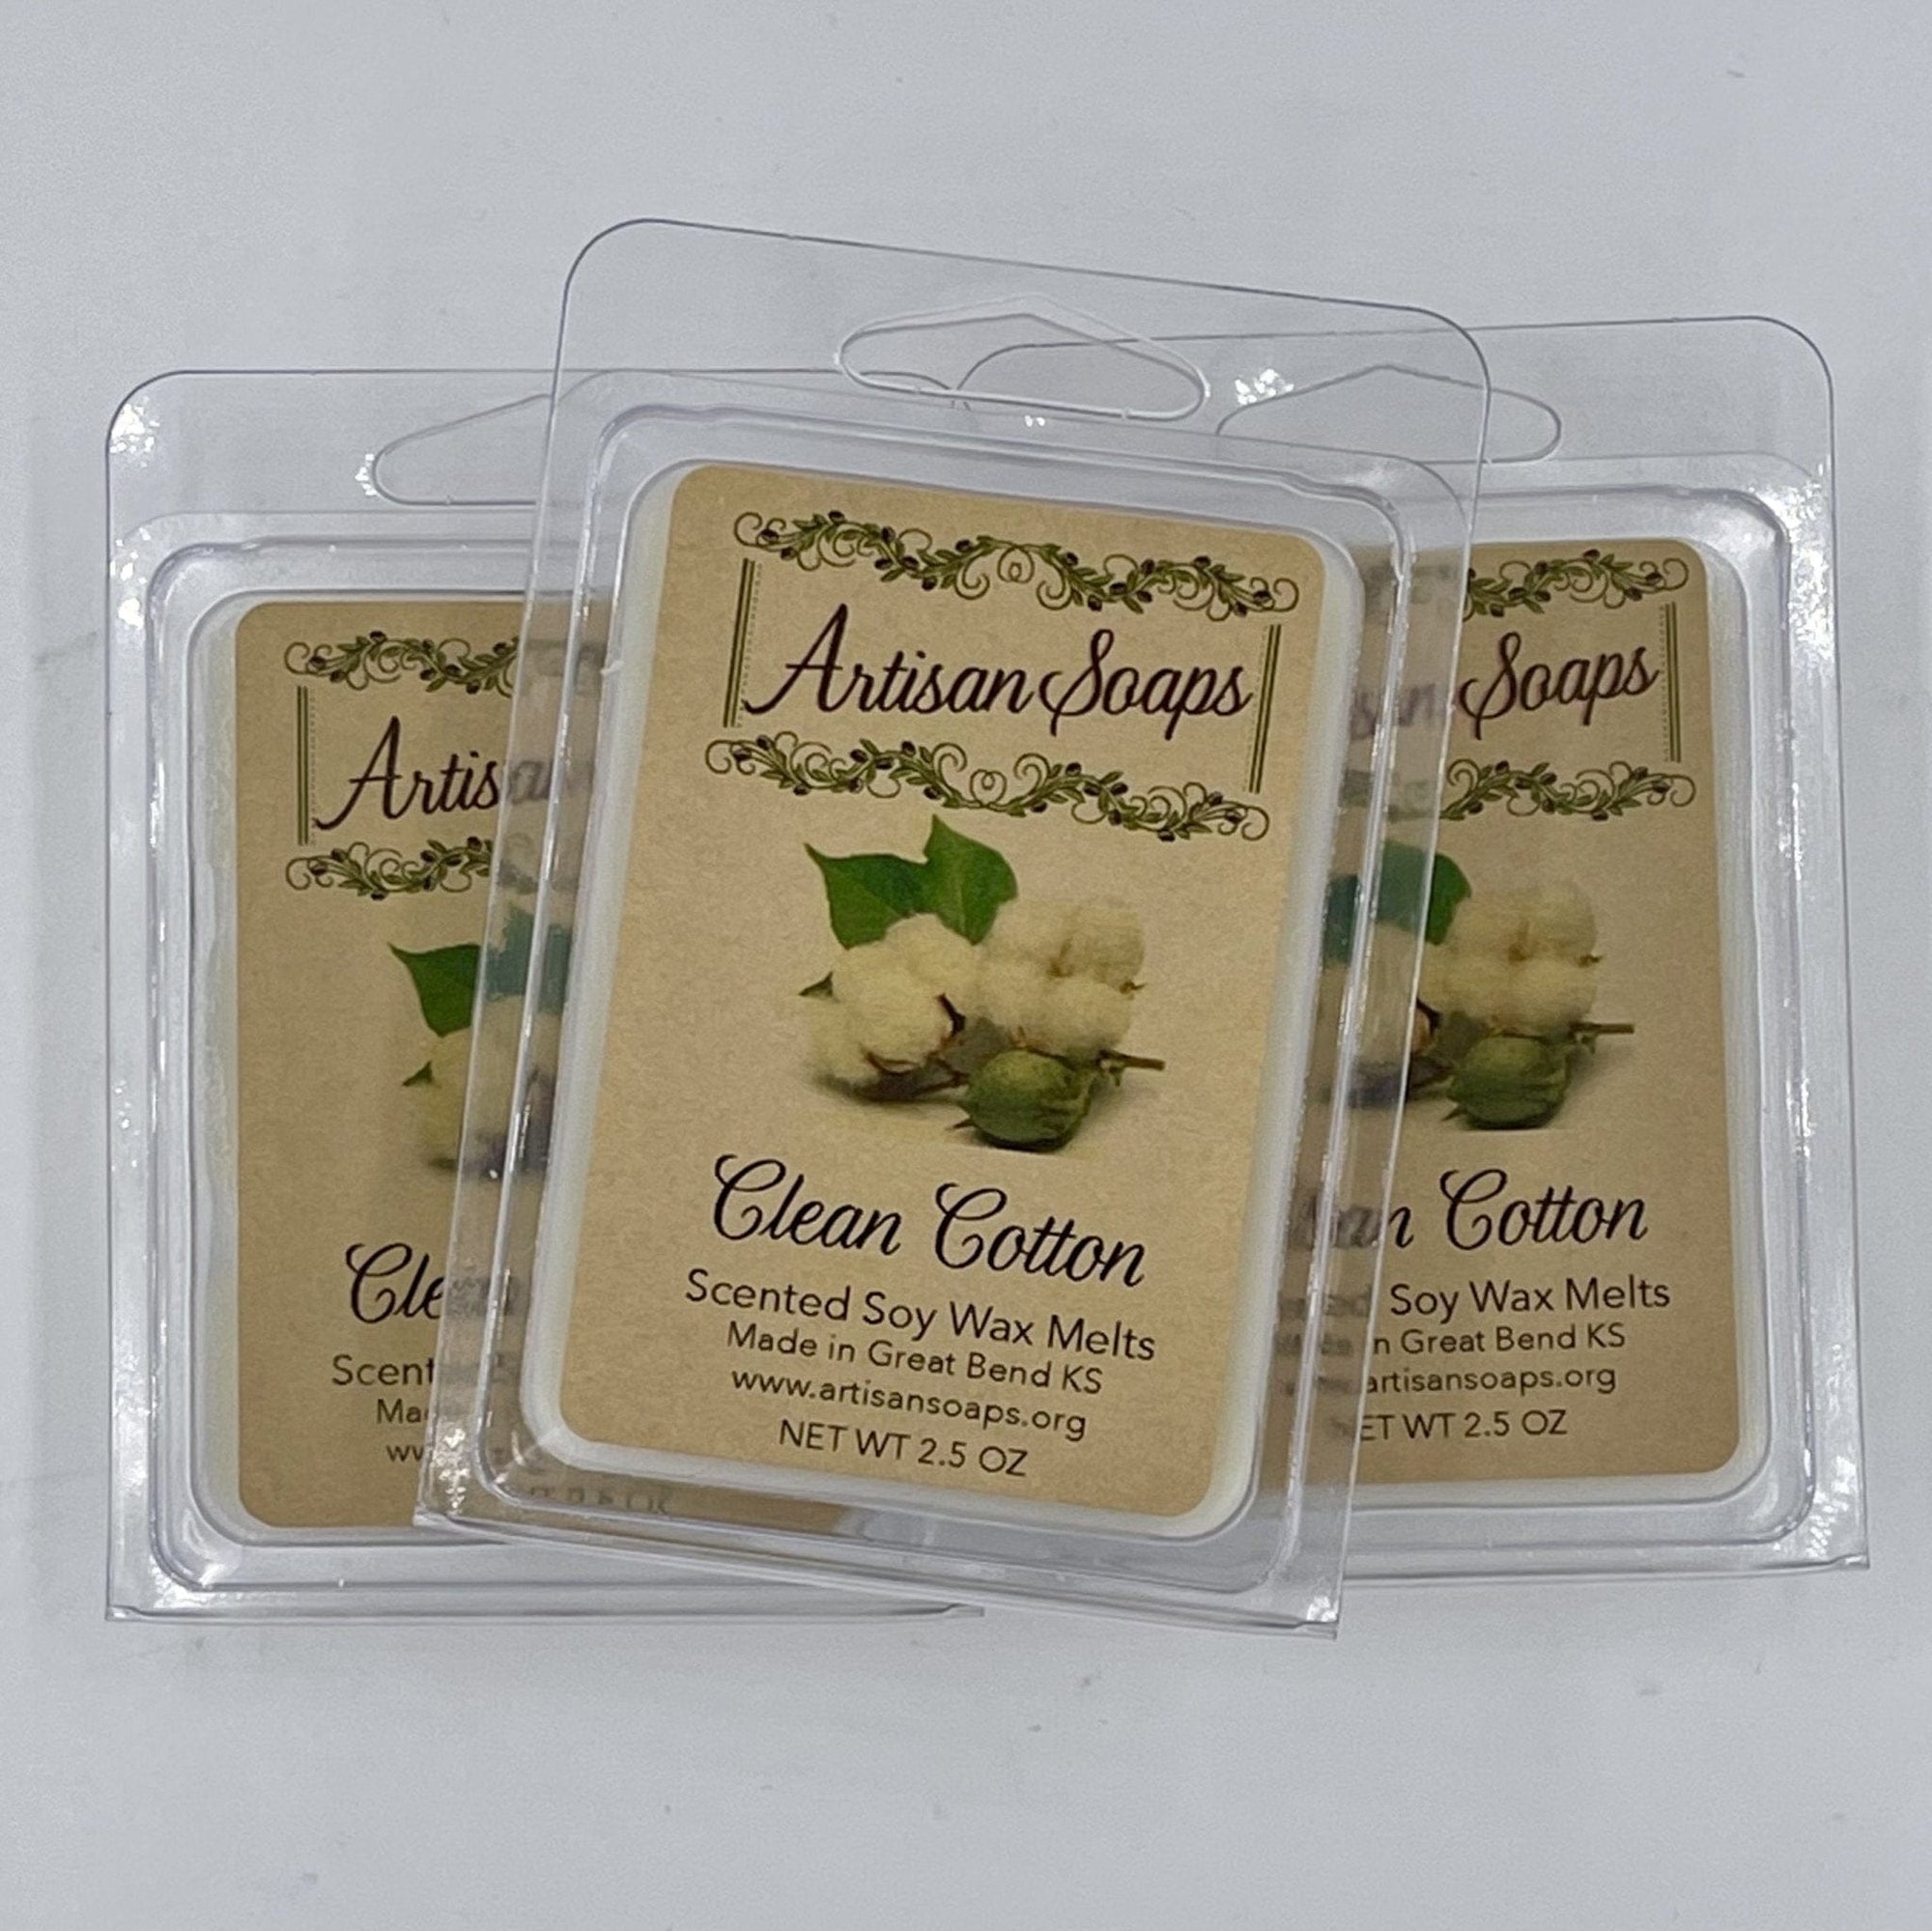 Clean Cotton Soy Wax Melt - Artisan Soaps